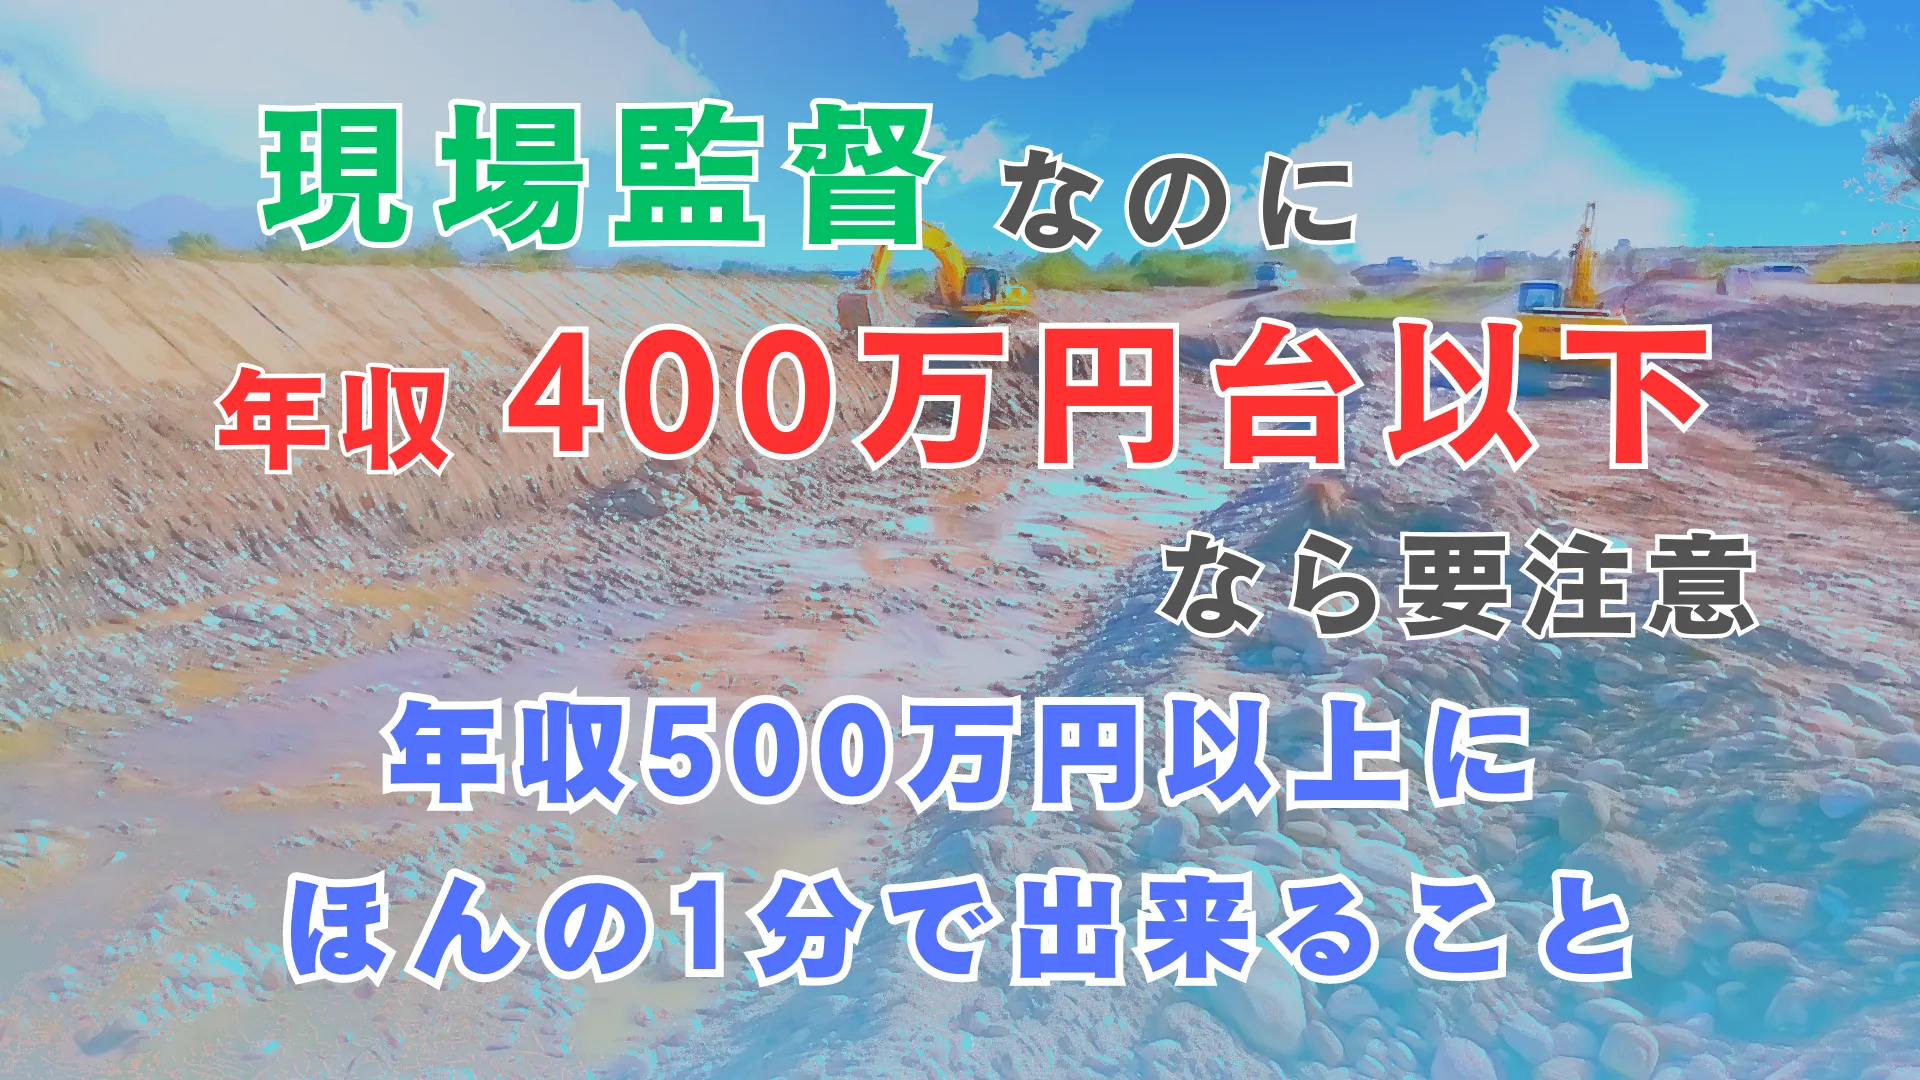 4-million-yen-or-less